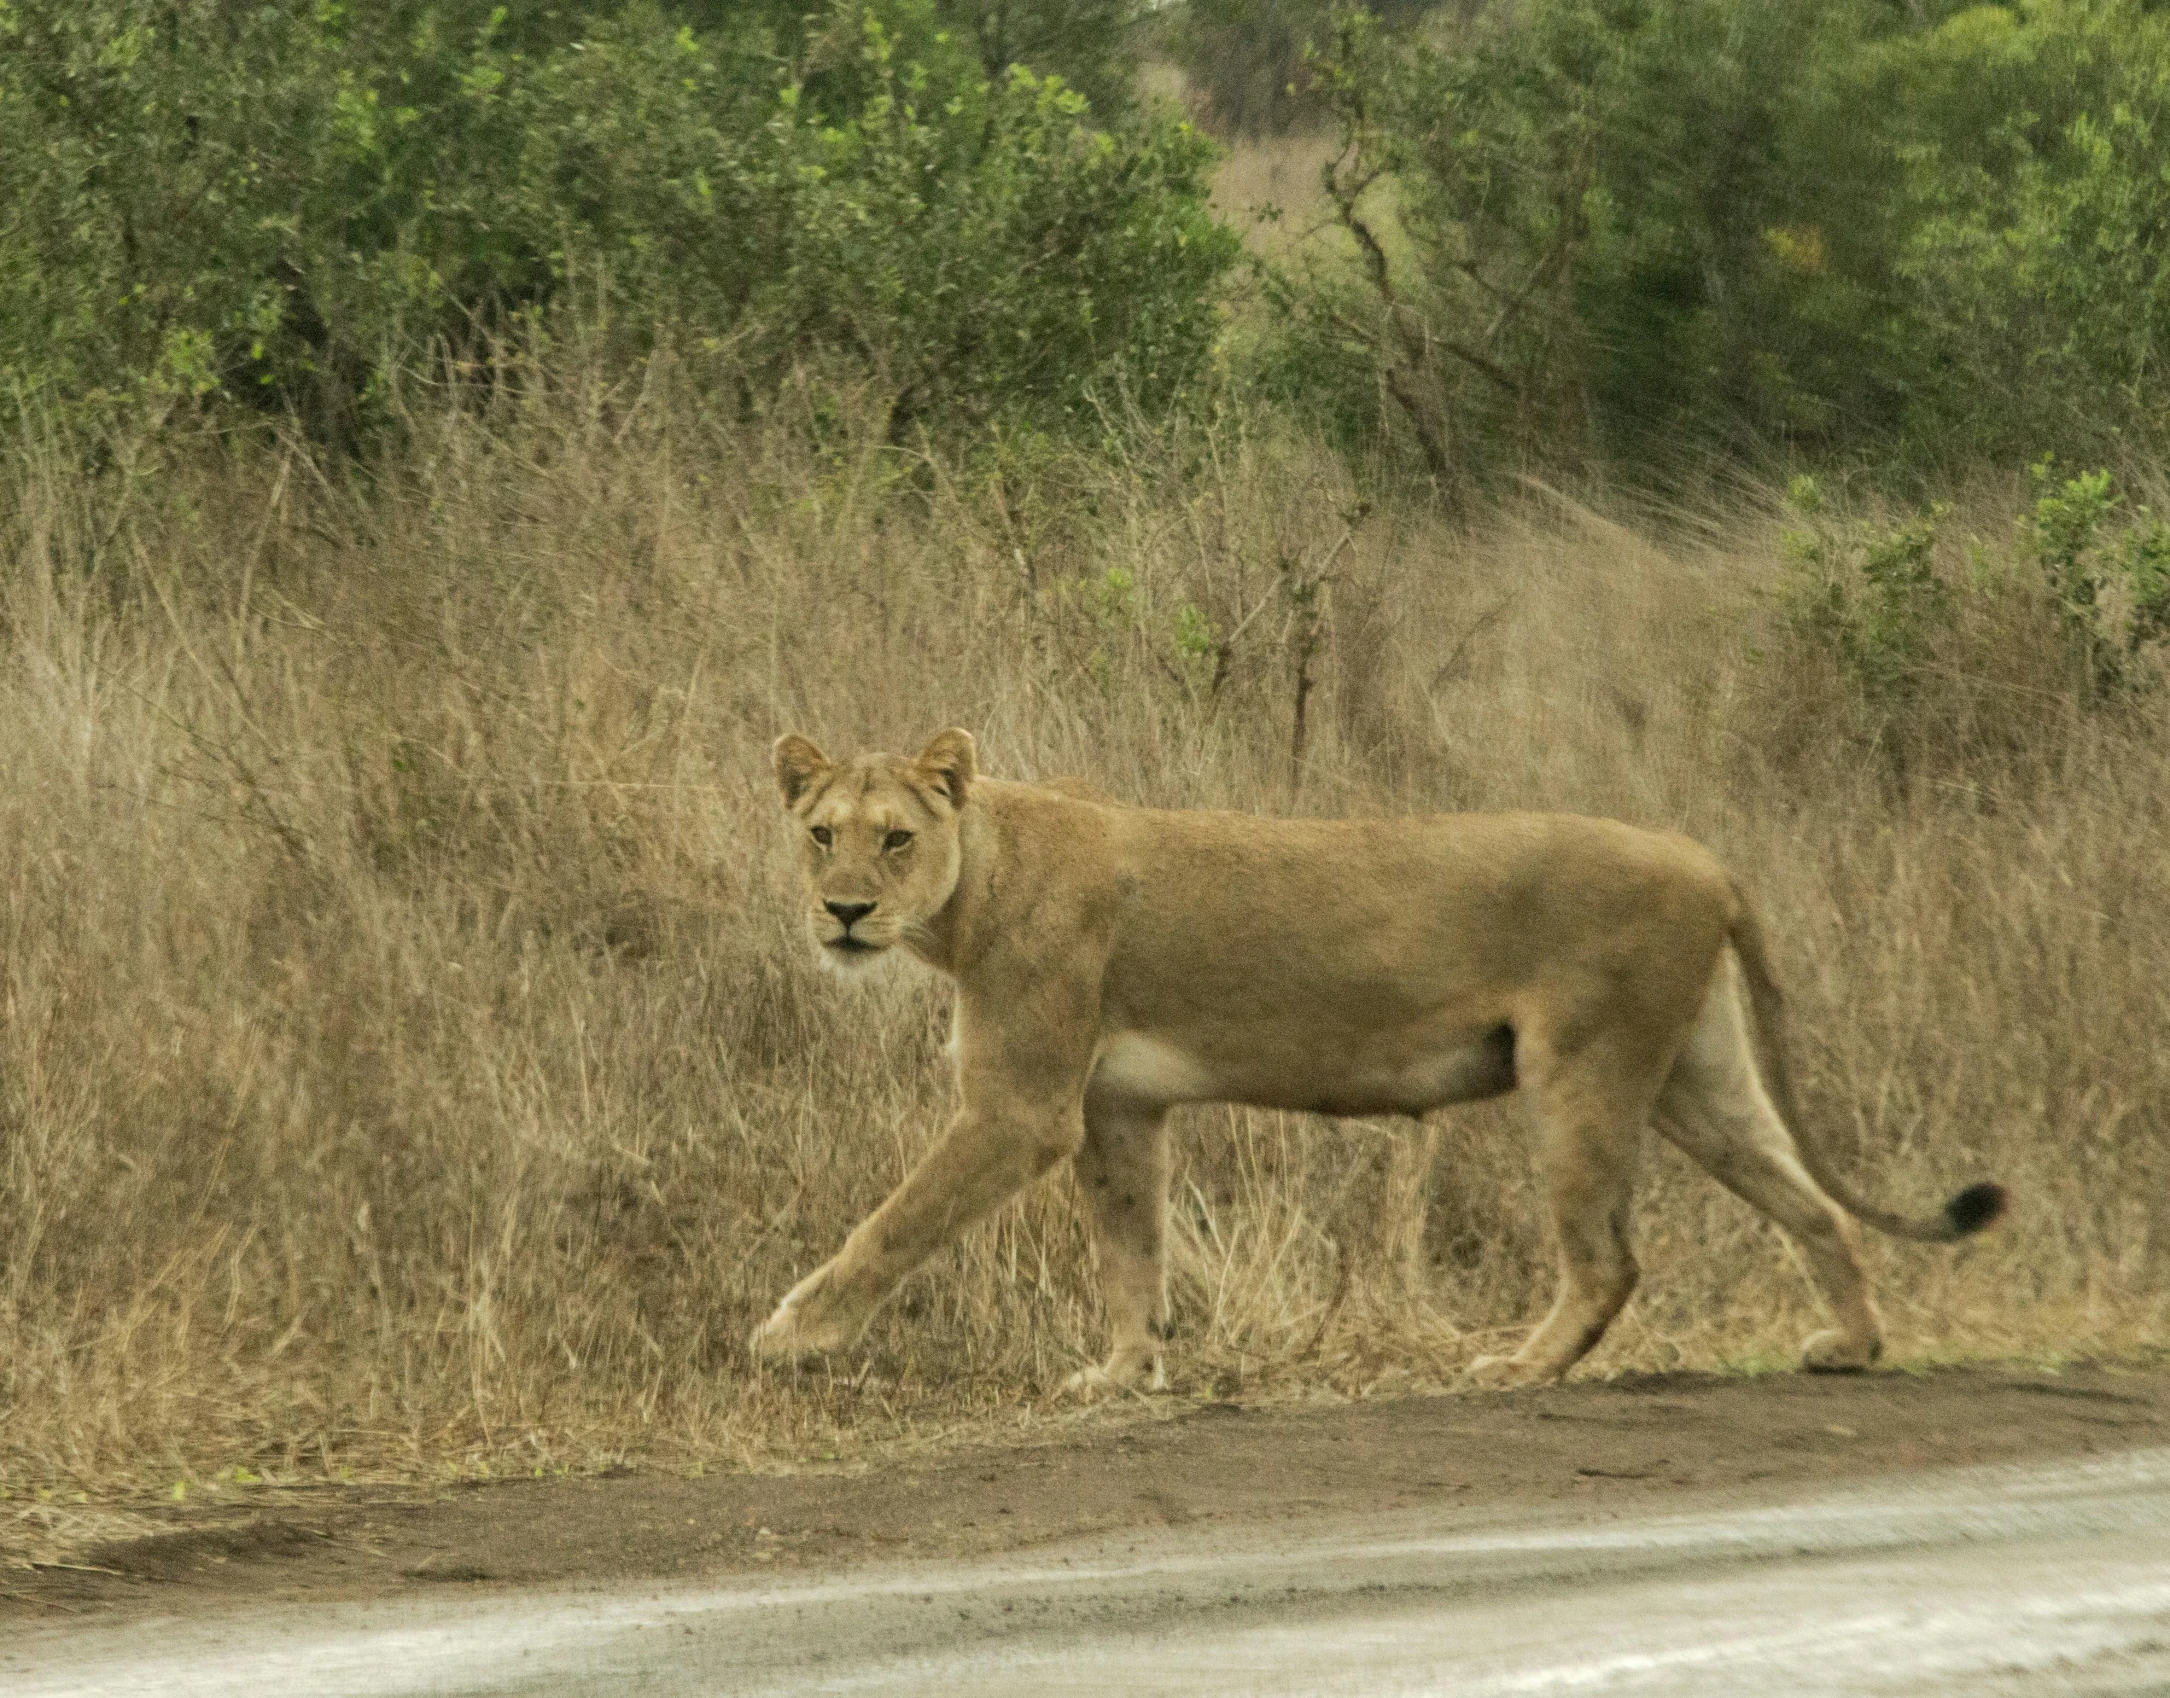 a lion walking across a grass and dirt road